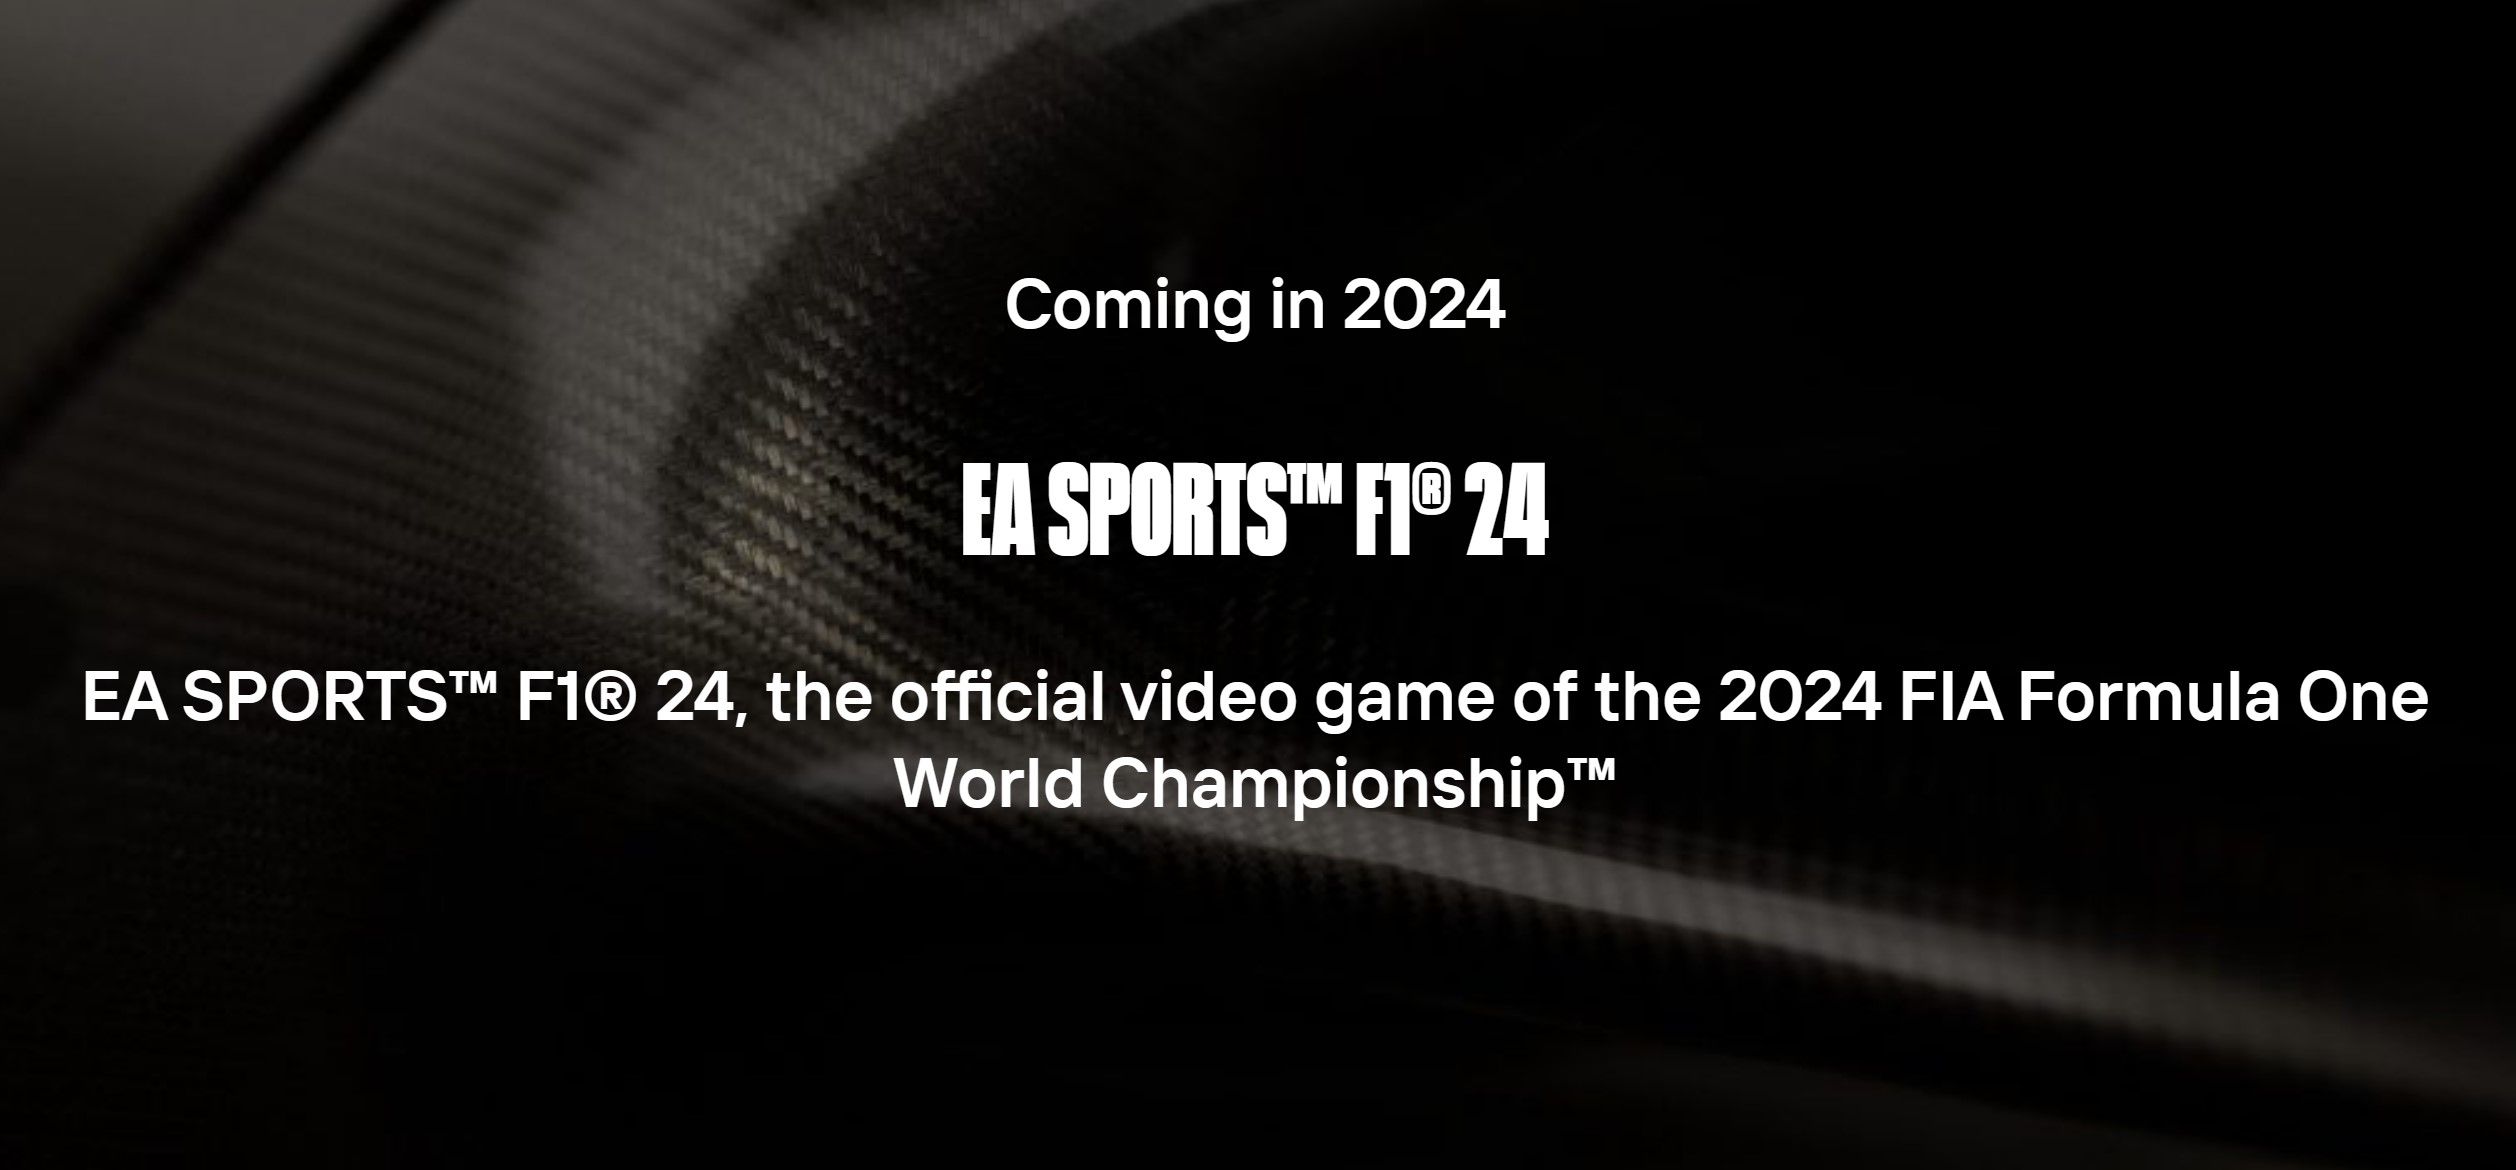 EA Sports F1 24 Teaser February 26 2024